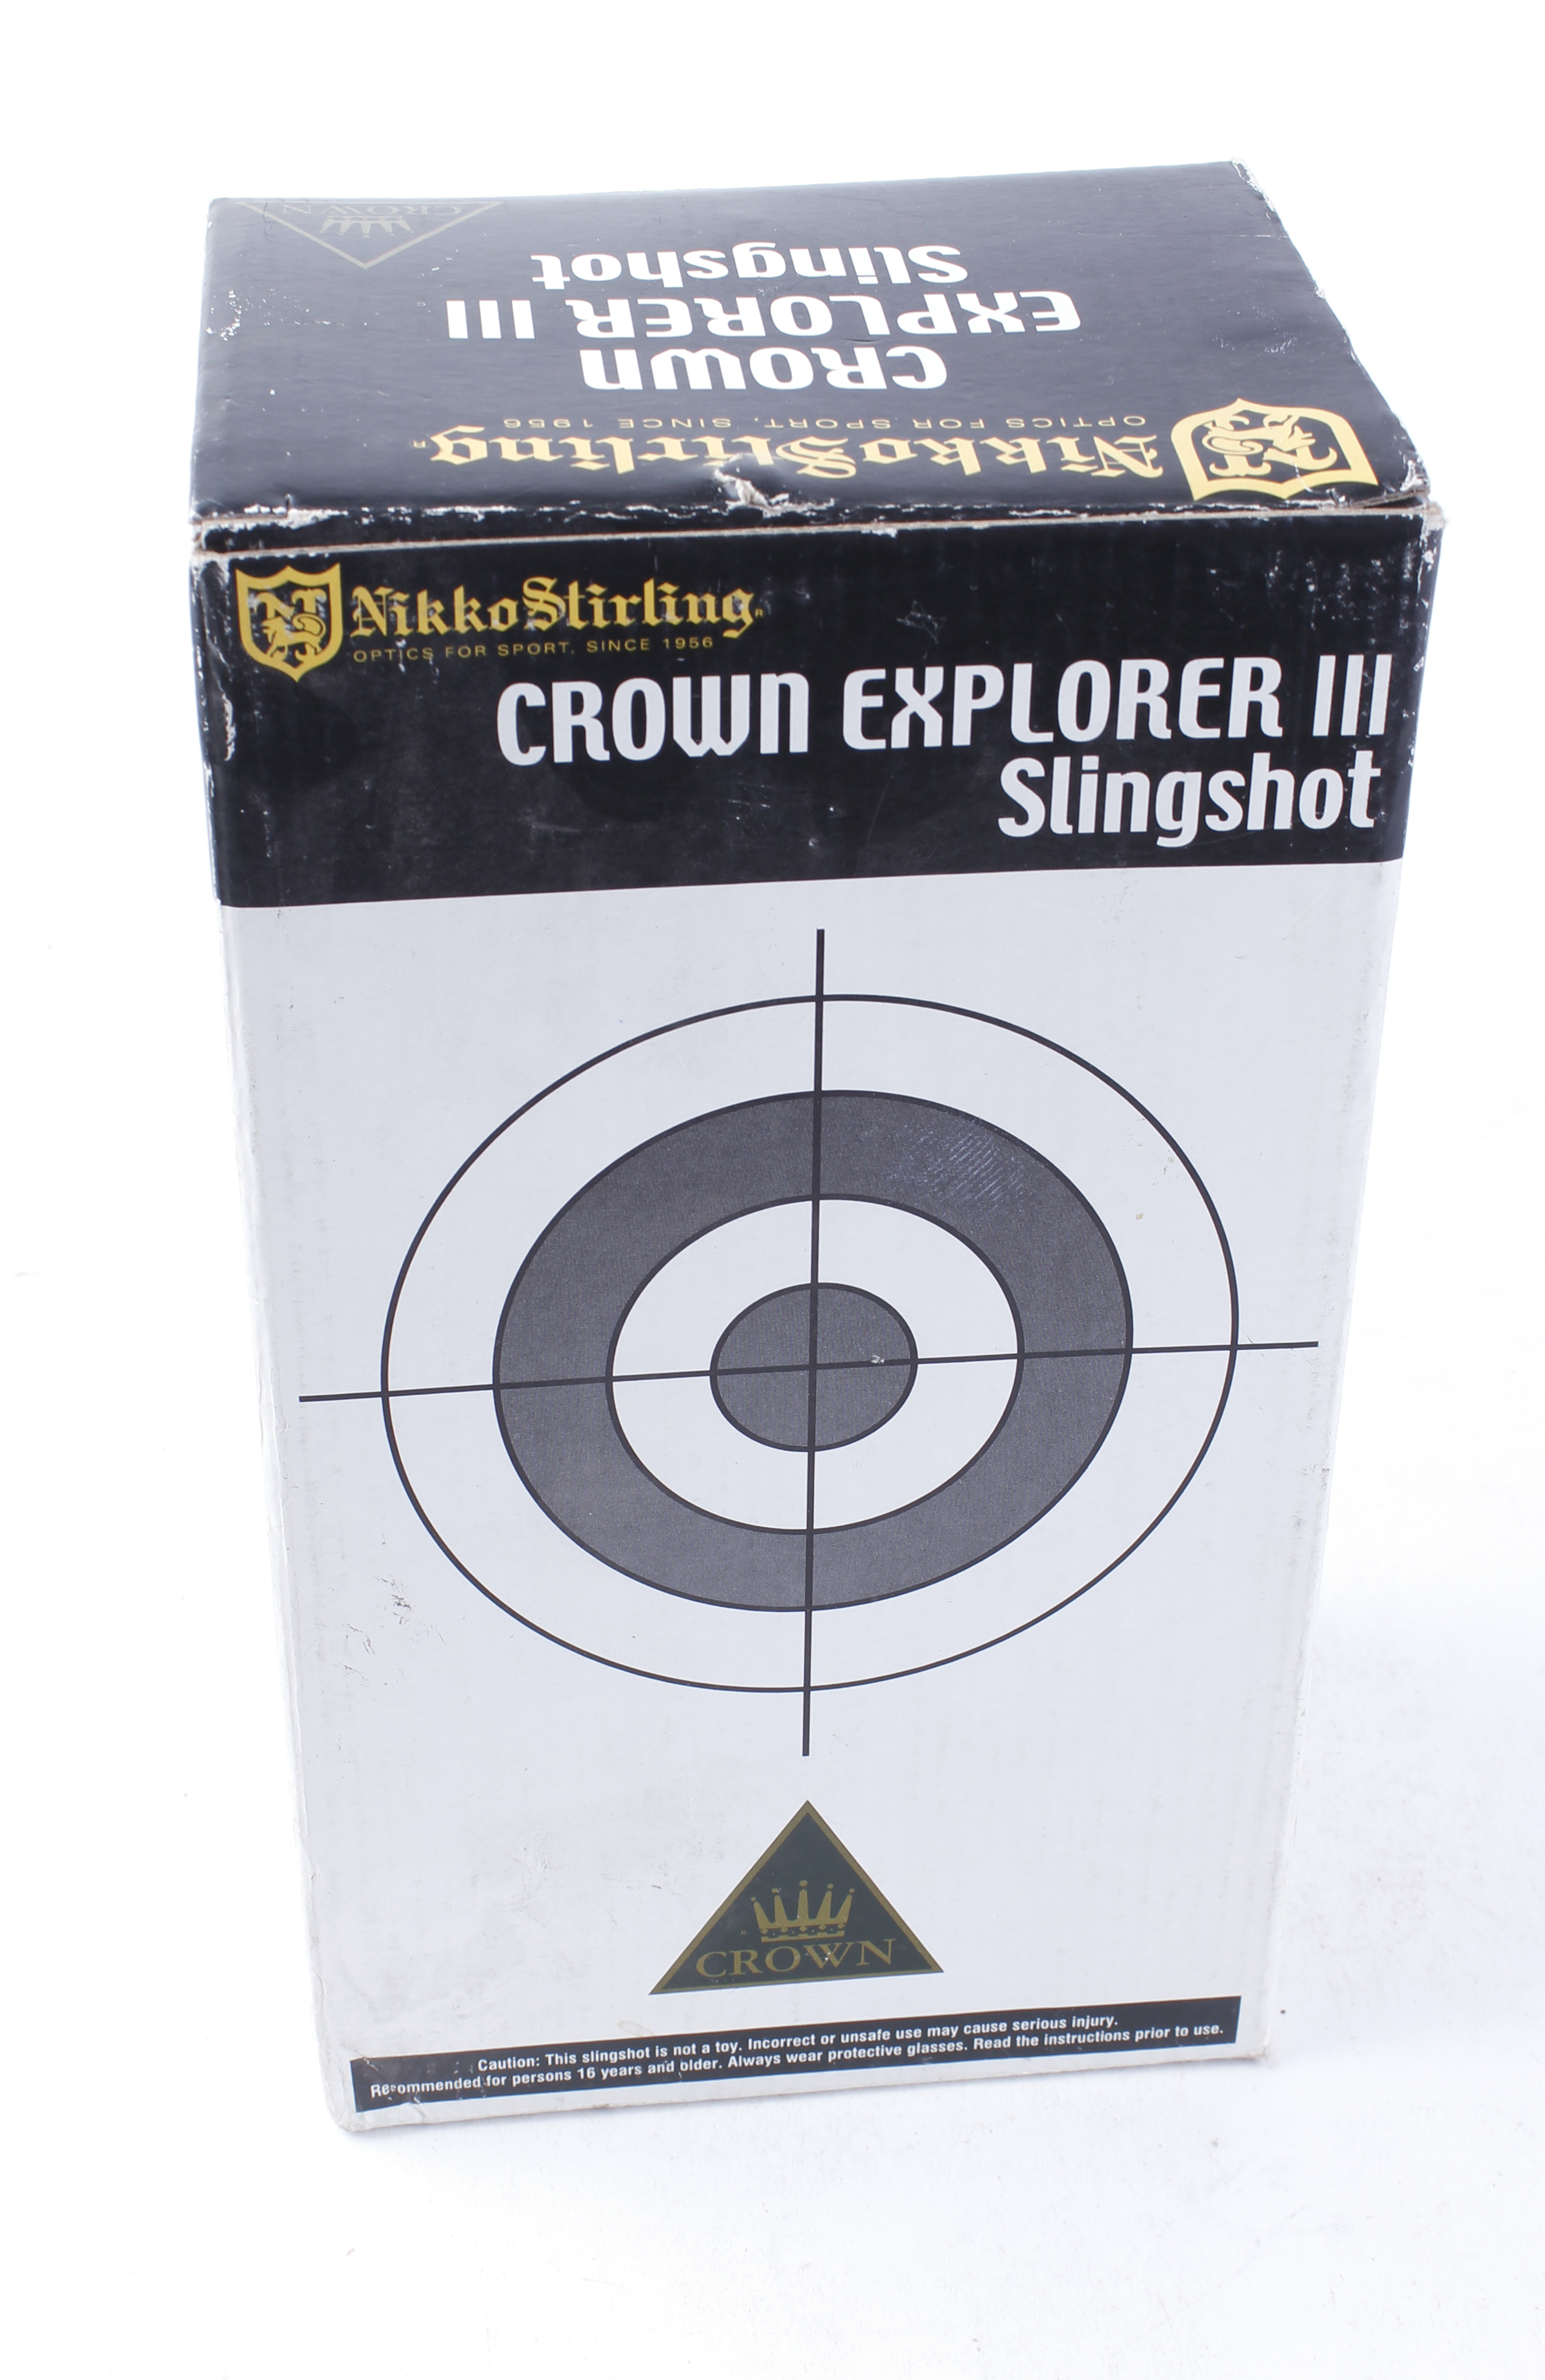 Nikko Stirling Crown Explorer III slingshot, boxed as new